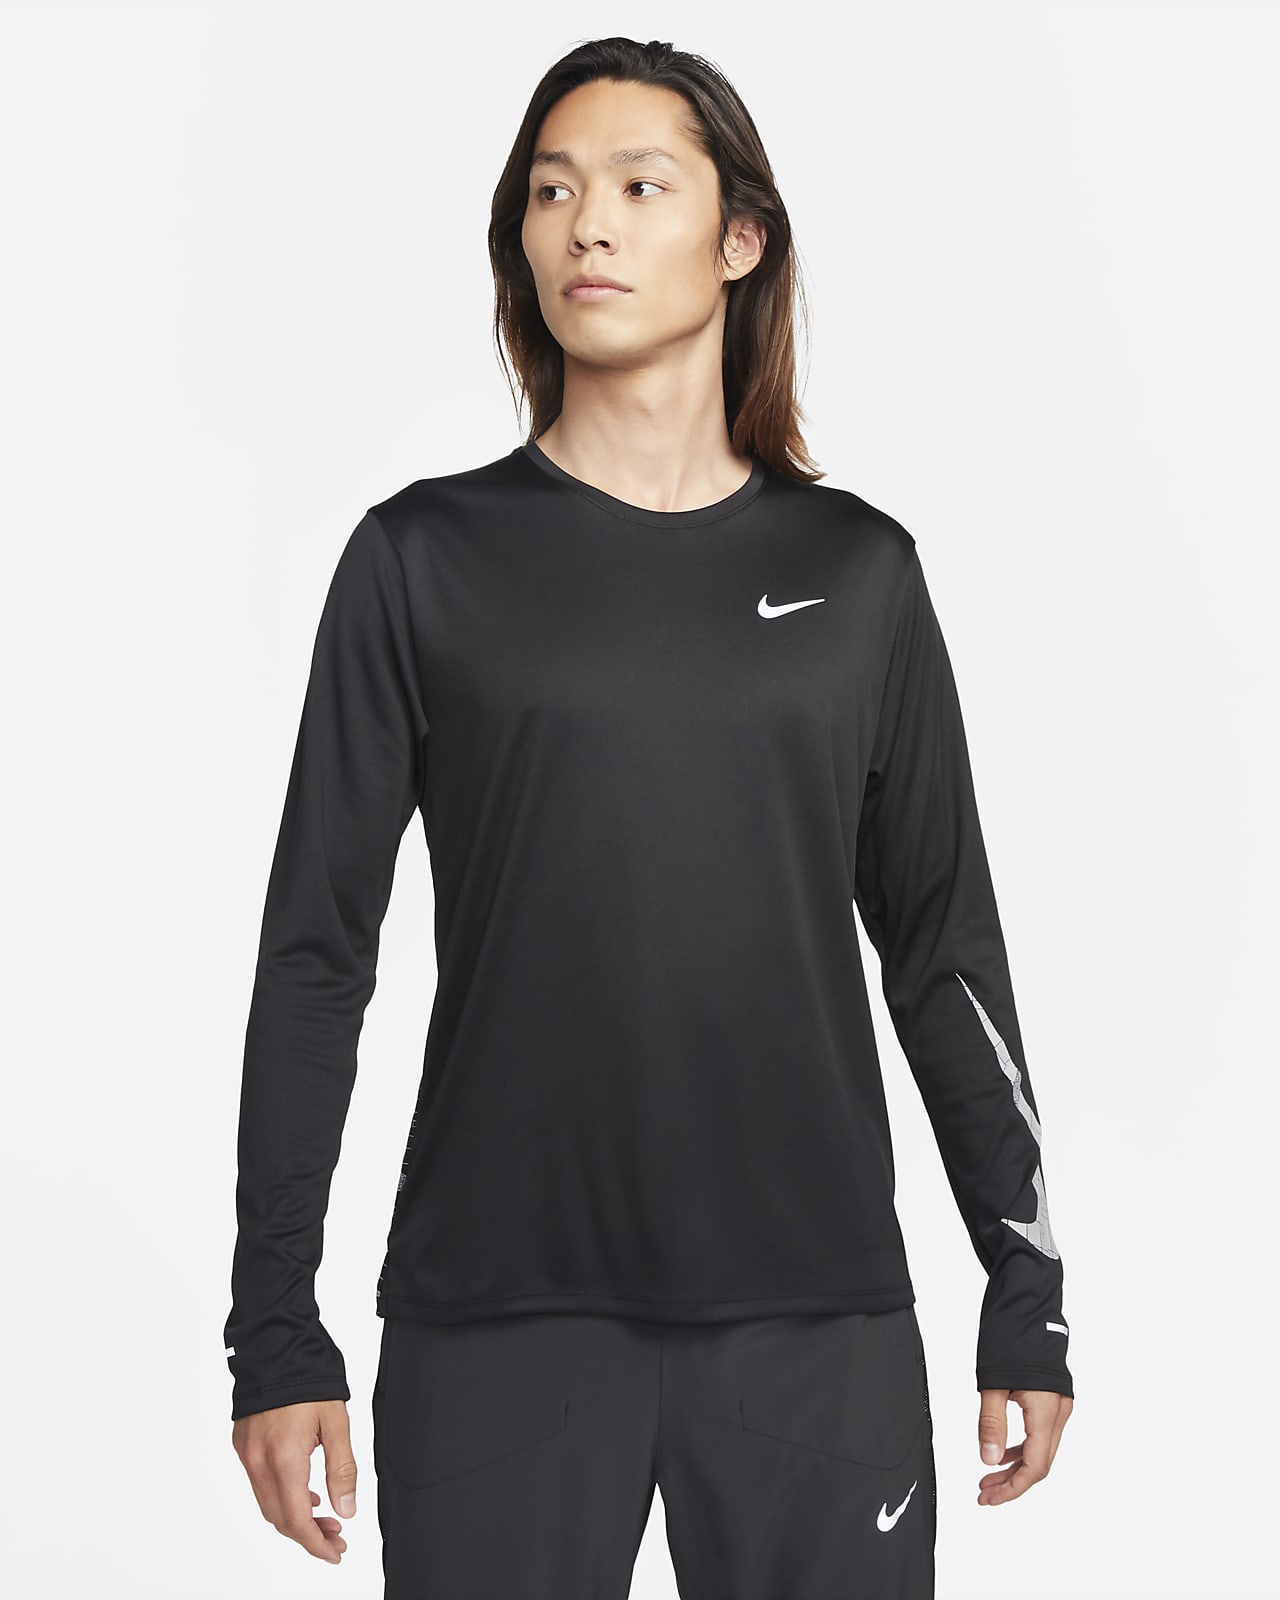 Amigo Cruel Infrarrojo Nike Dri-FIT Miler Run Division Men's Flash Long-Sleeve Running Top. Nike SG